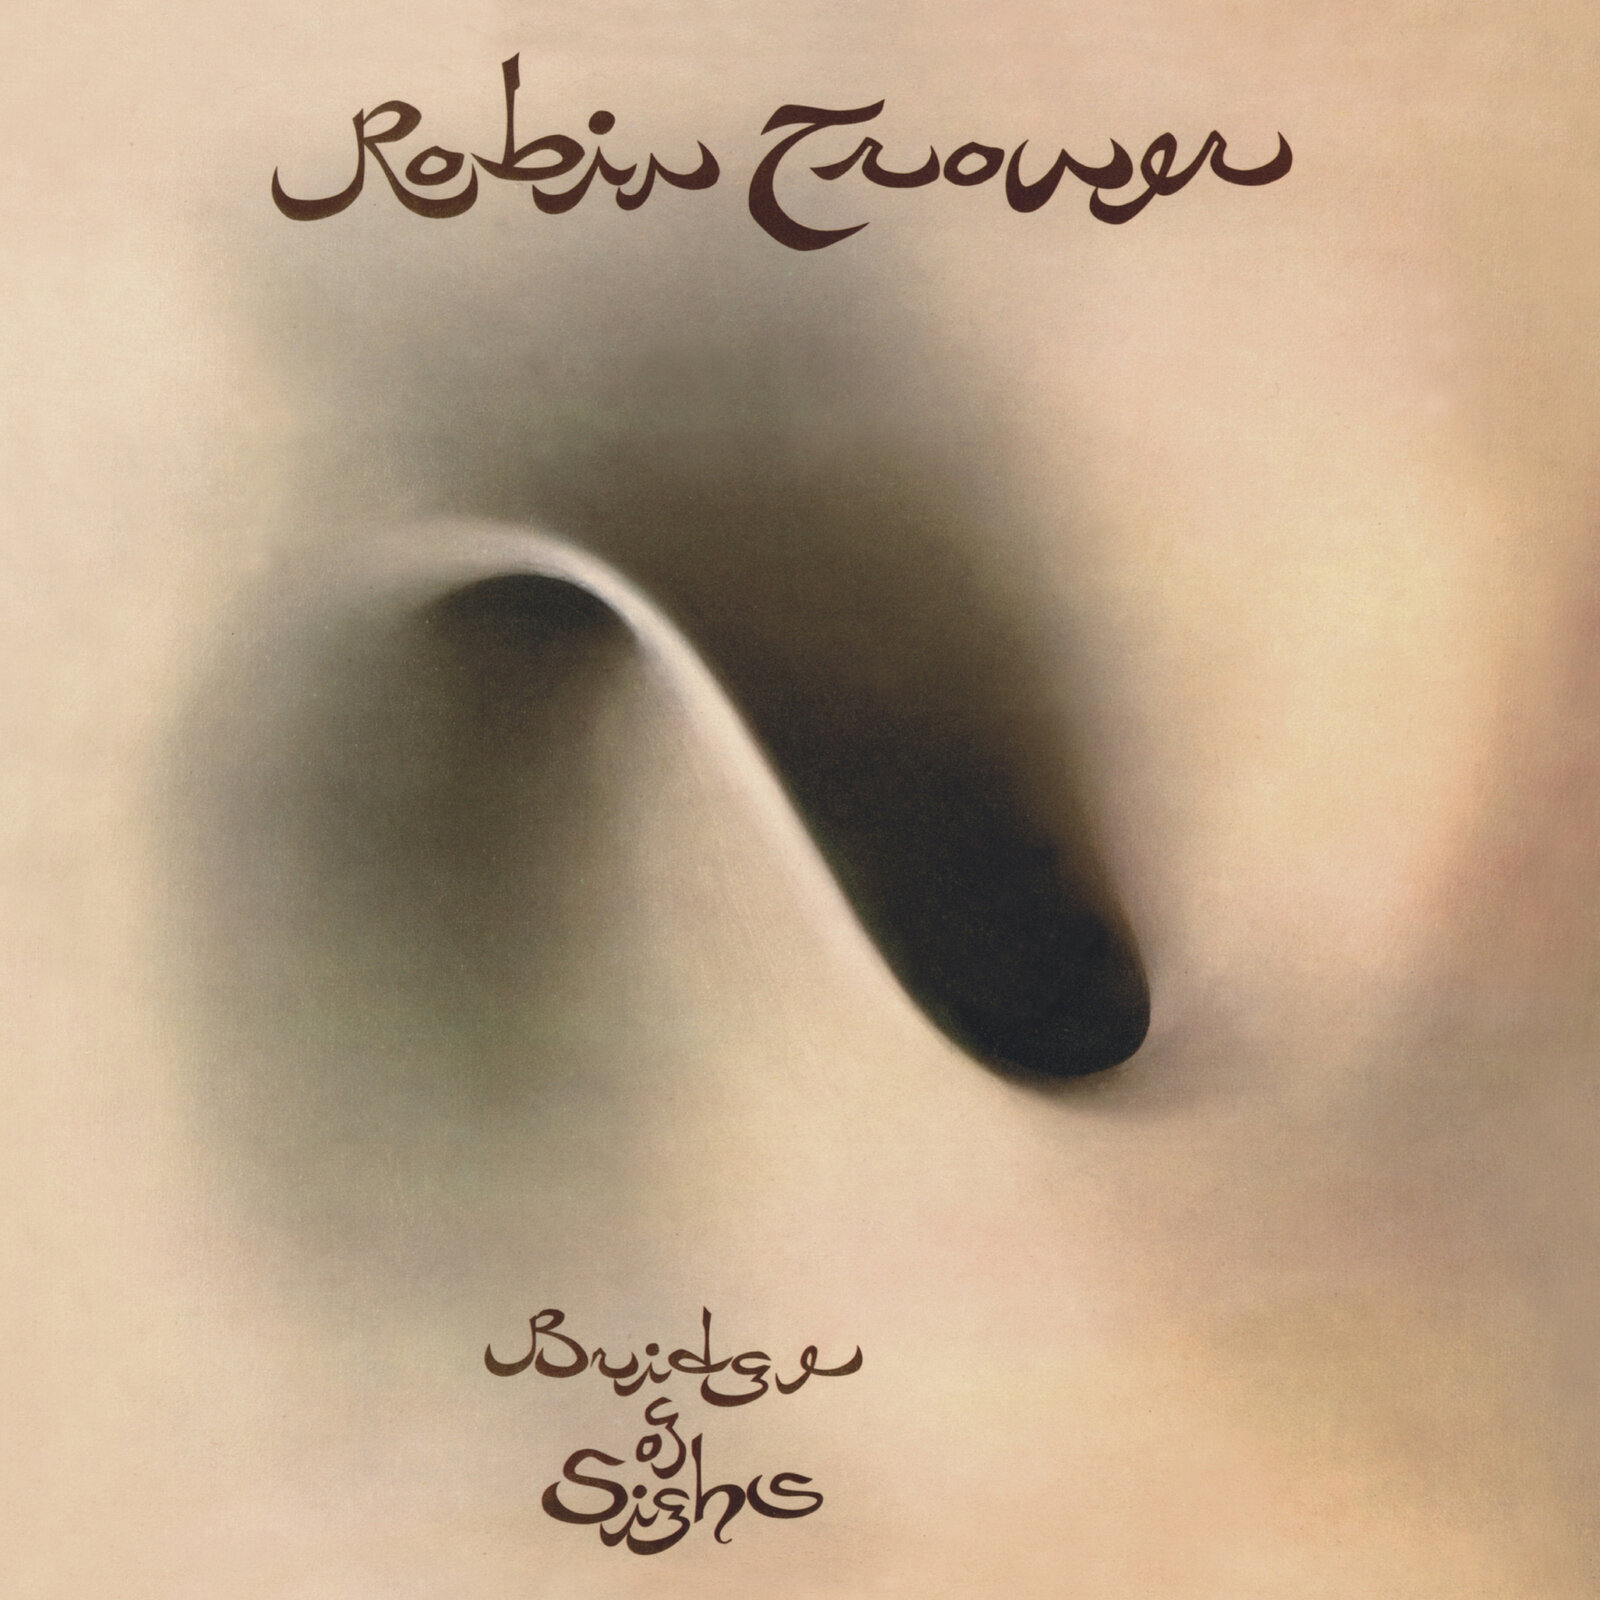 Glazbene CD Robin Trower - Bridge of Sighs (3 CD + BluRay)